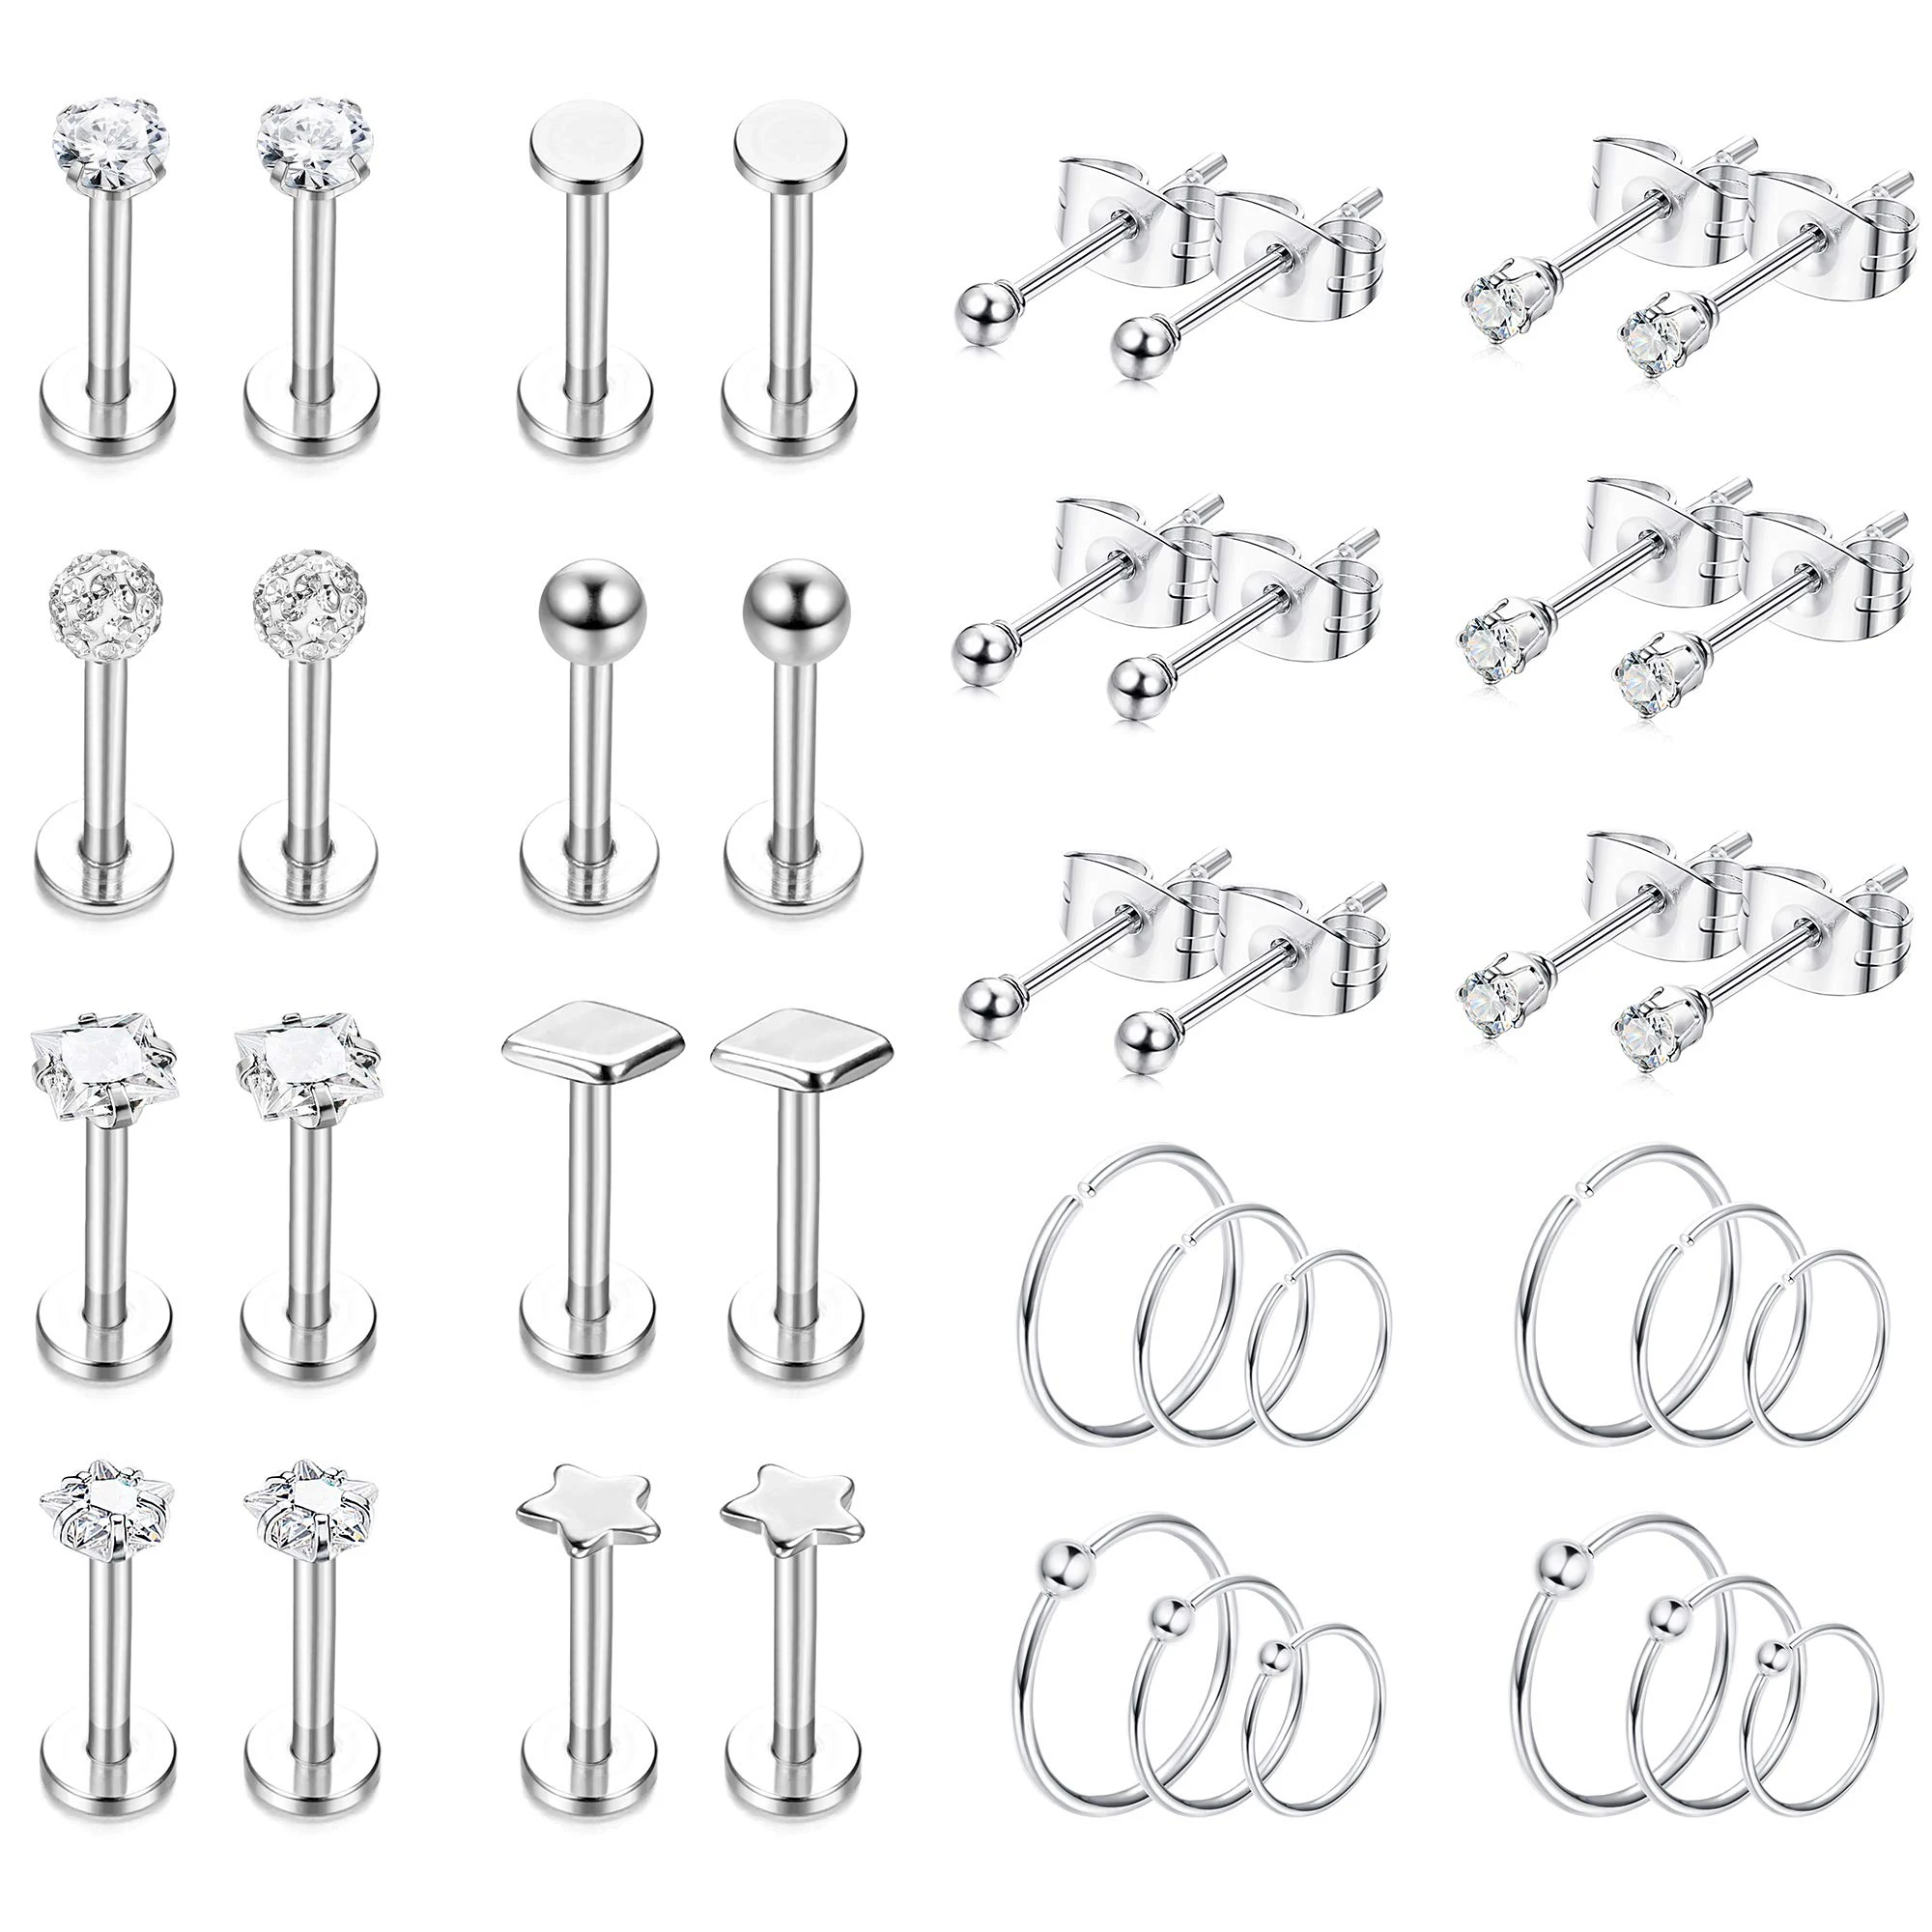 

20Pair Stainless Steel Tiny Stud Earrings Small Endless Hoops Earrings Set Ball CZ Stud Cartilage Earrings Tragus Helix Piercing